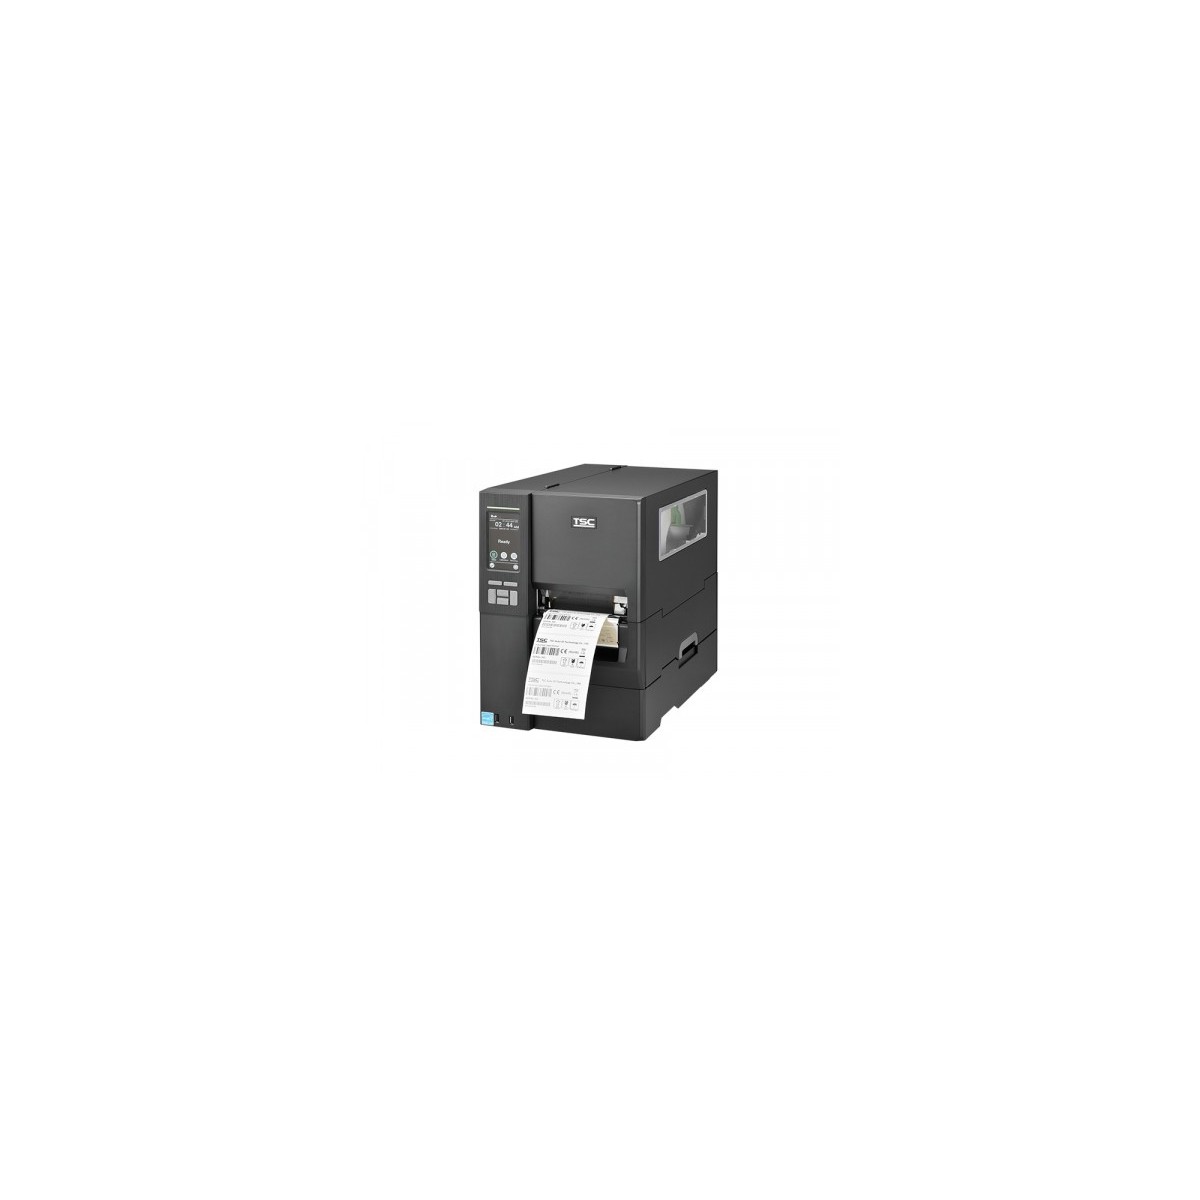 TSC MH241P 8 Punkte/mm 203dpi Rewinder Disp. RTC USB RS232 Ethernet - Label Printer - Label Printer